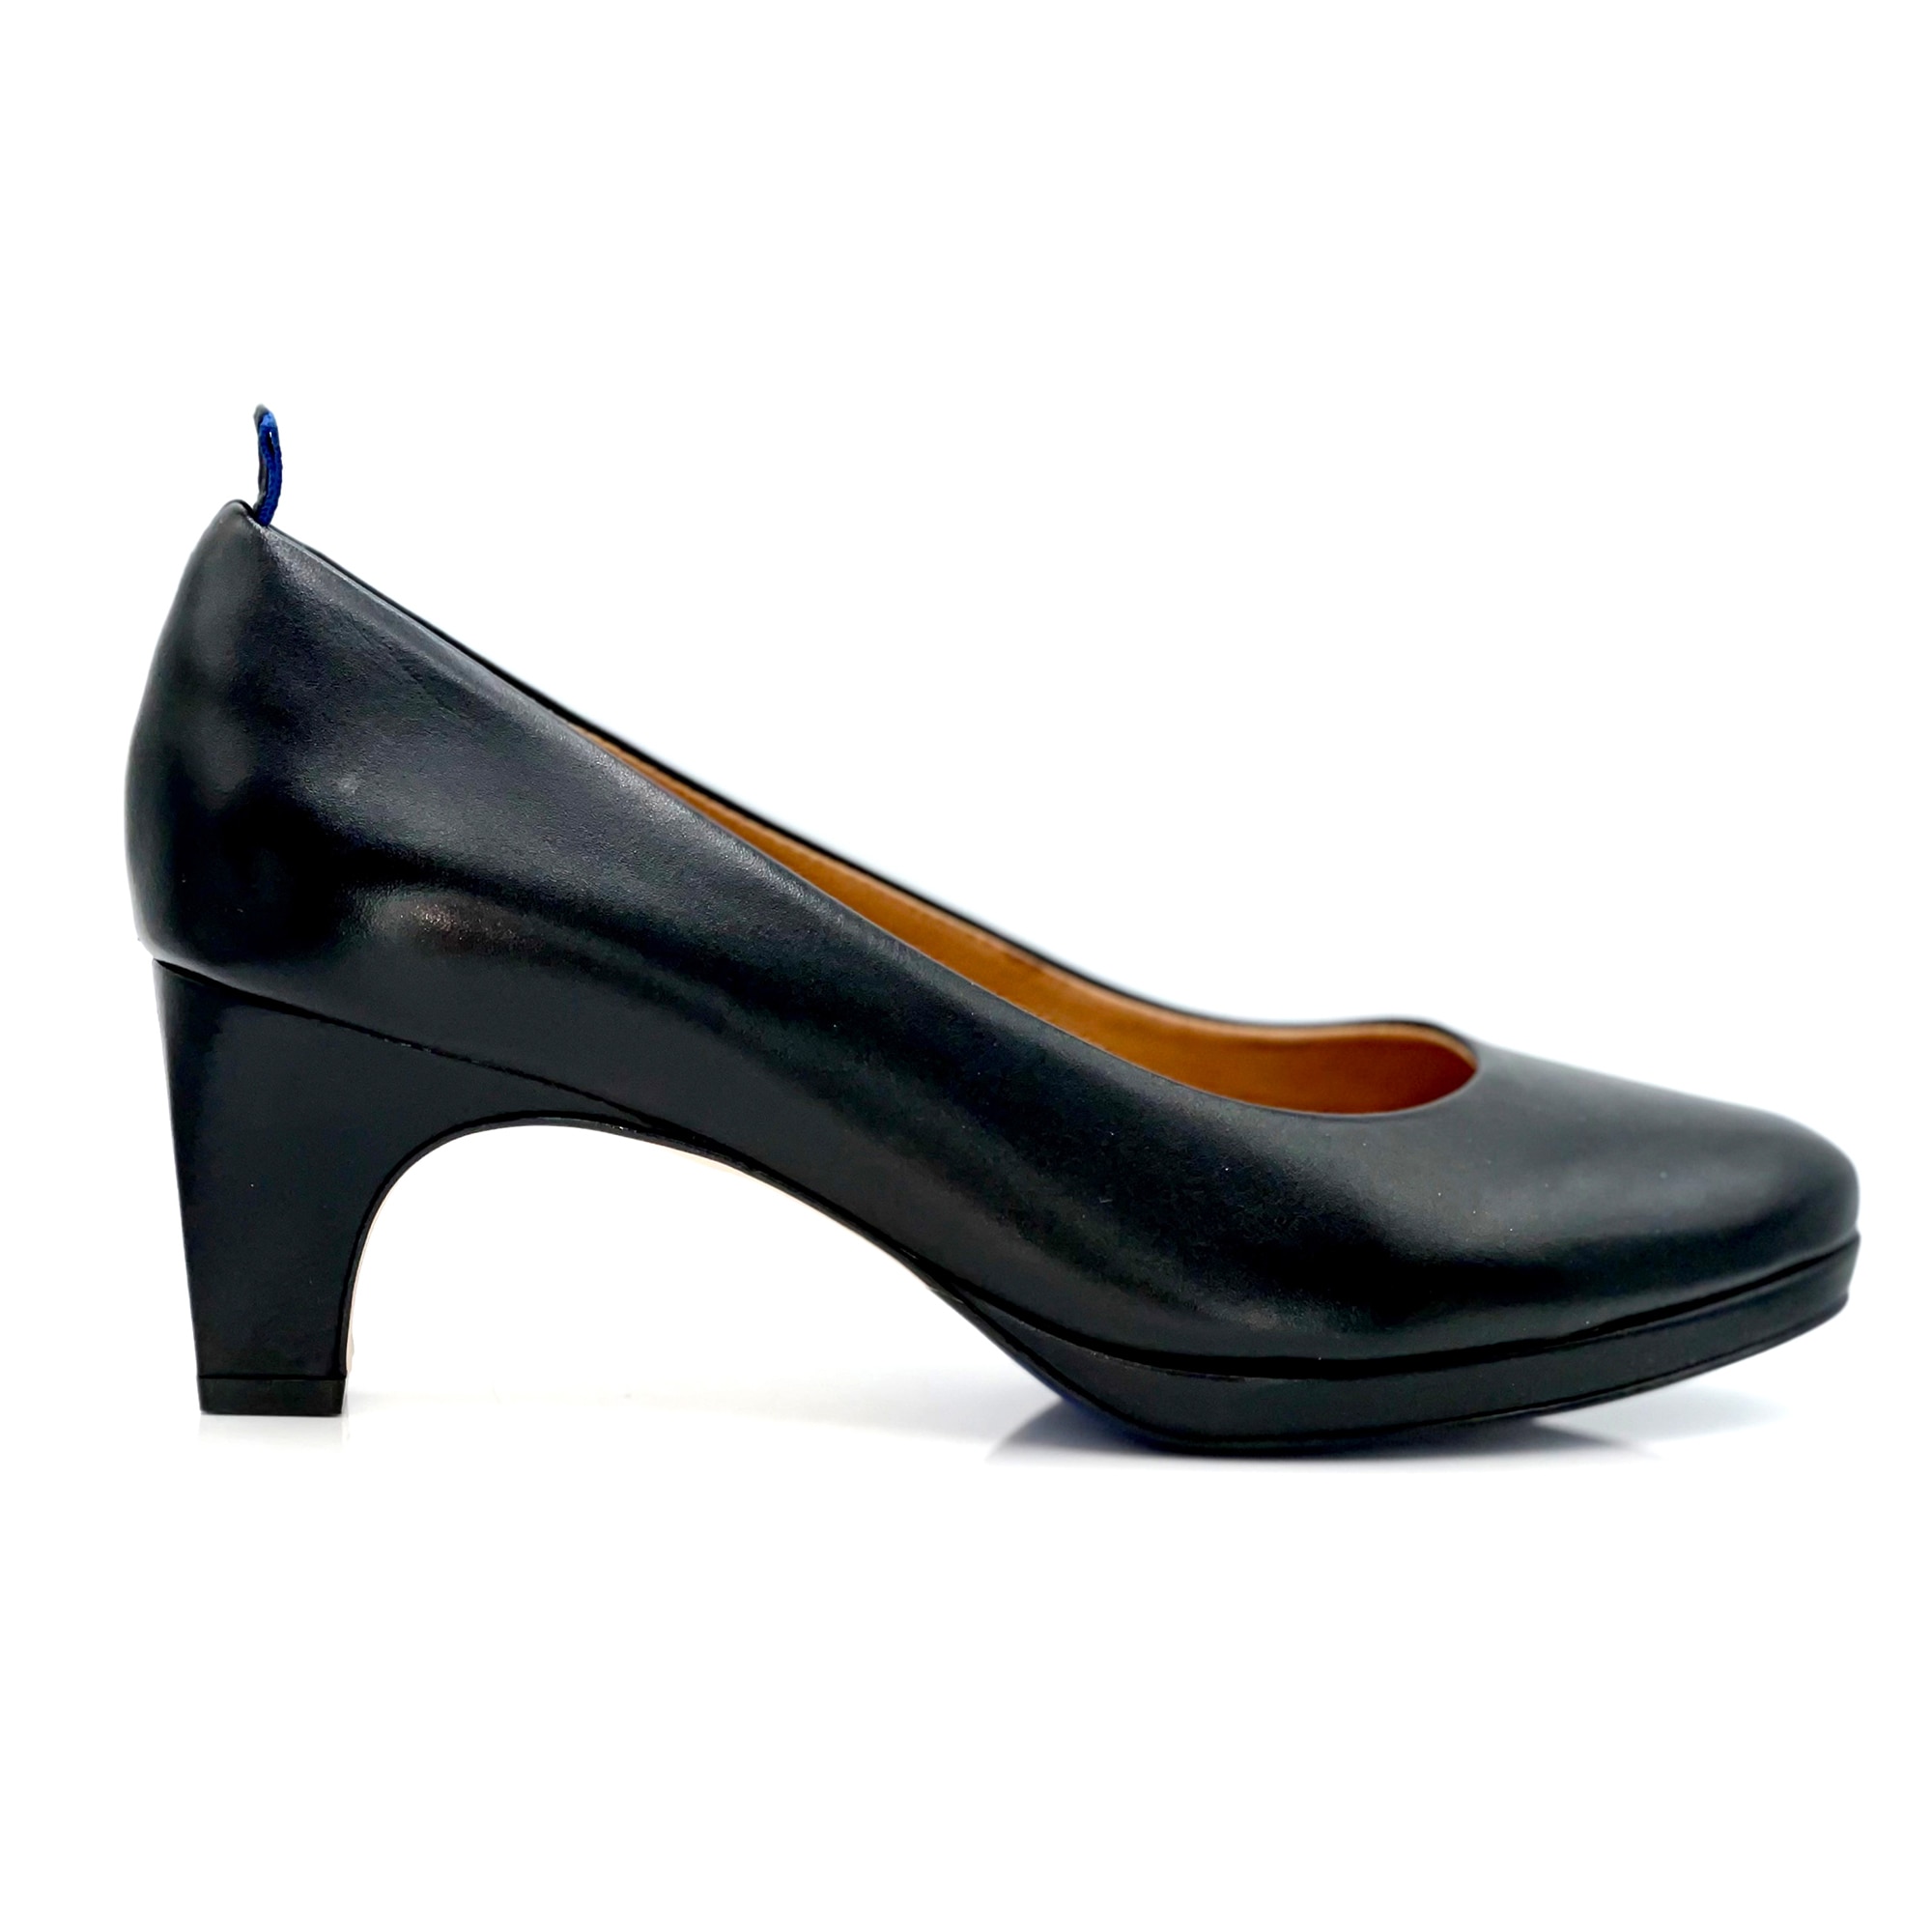 Clothing & Shoes - Shoes - Heels & Pumps - Dr Liza Footwear Farah 